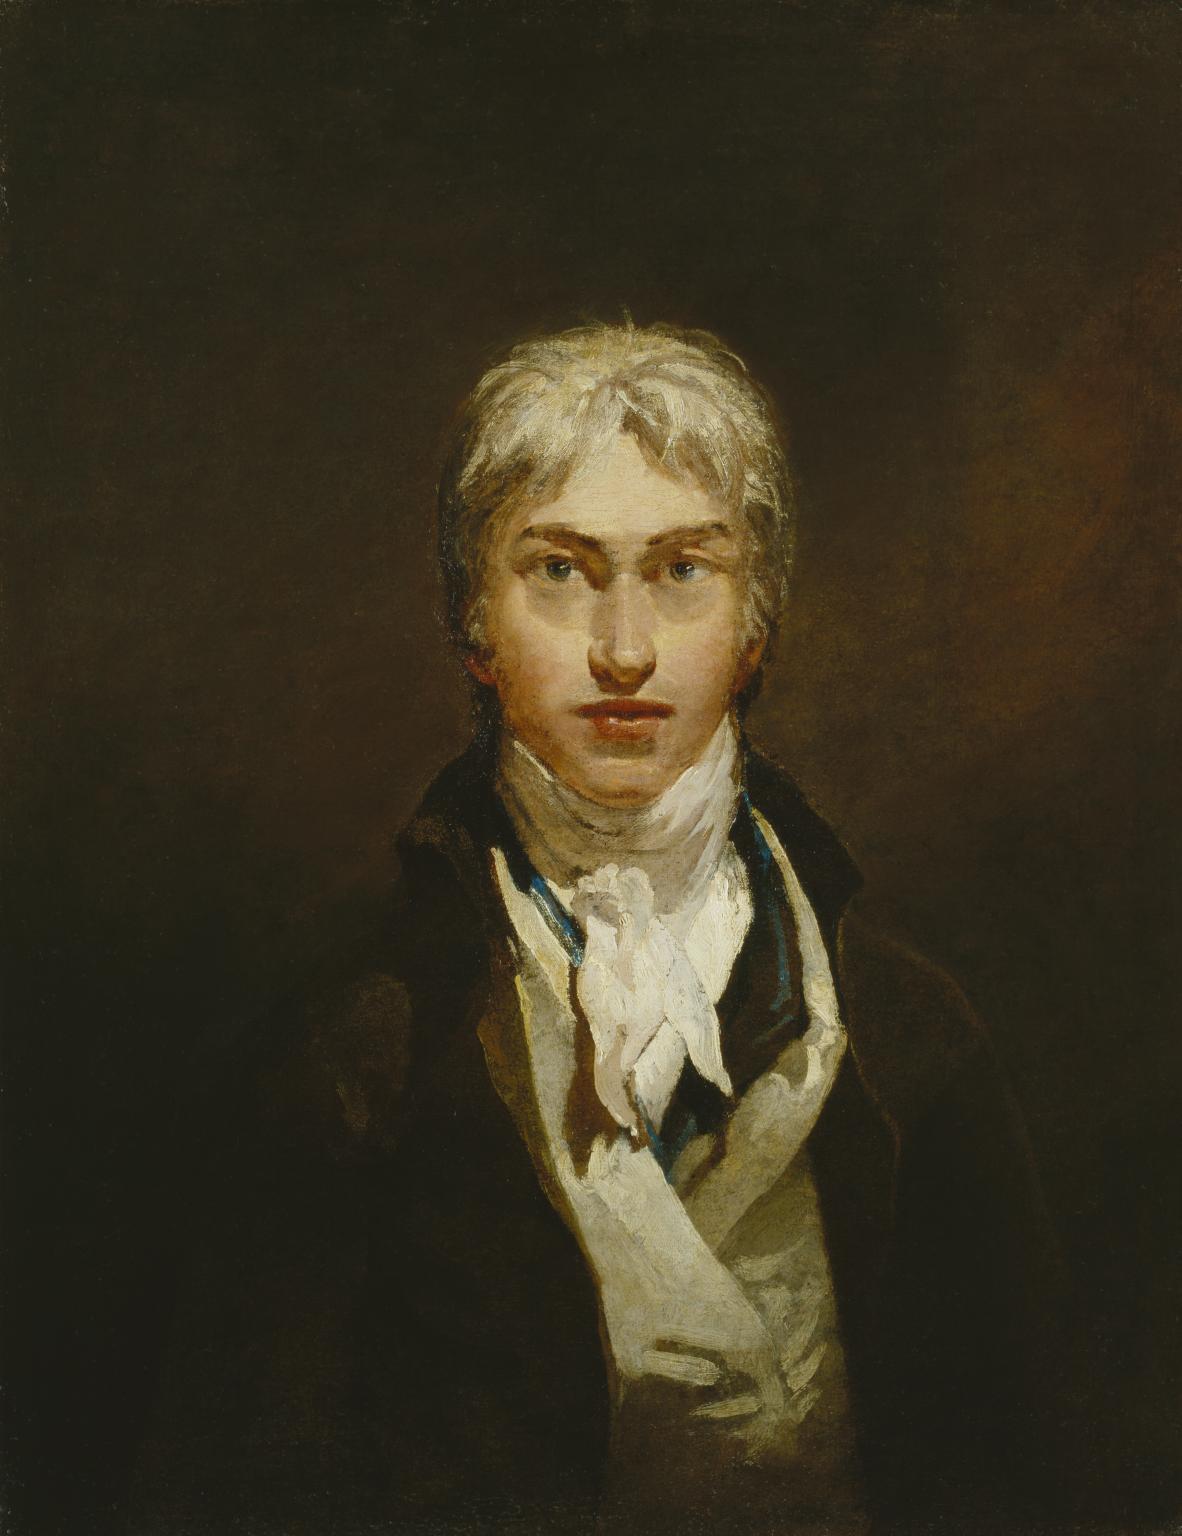 Joseph Mallord William Turner - 1775 - 19. Dezember 1851